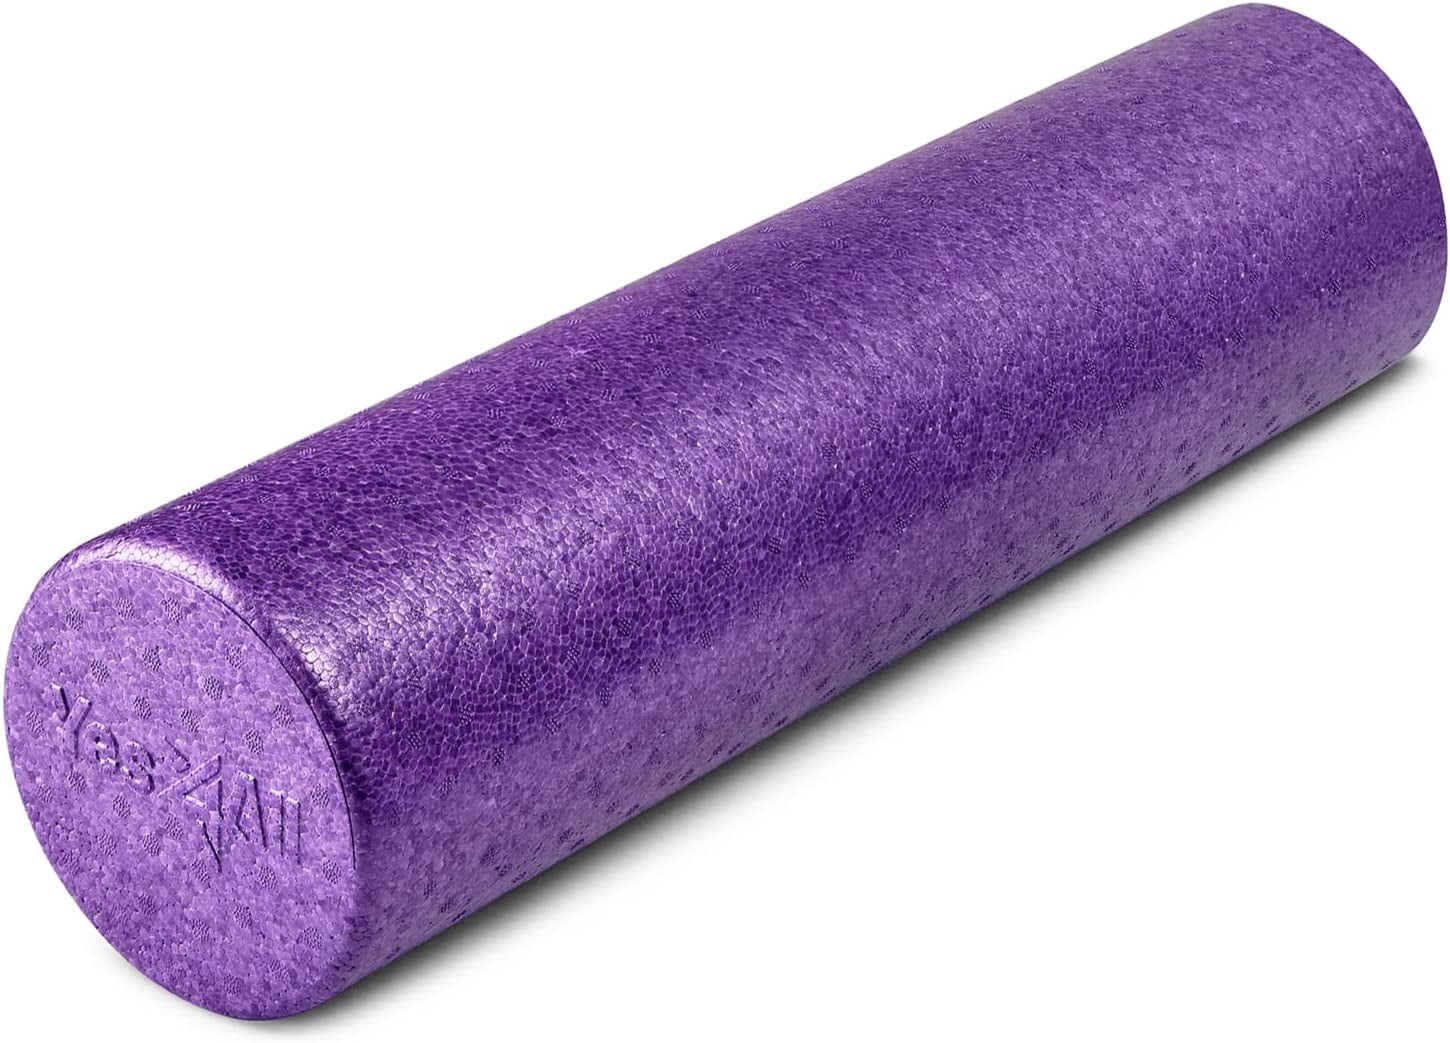 Extra Firm High Density Foam Roller Best for Flexibility and Rehab Exercises Yes4All EPP Exercise Foam Roller 